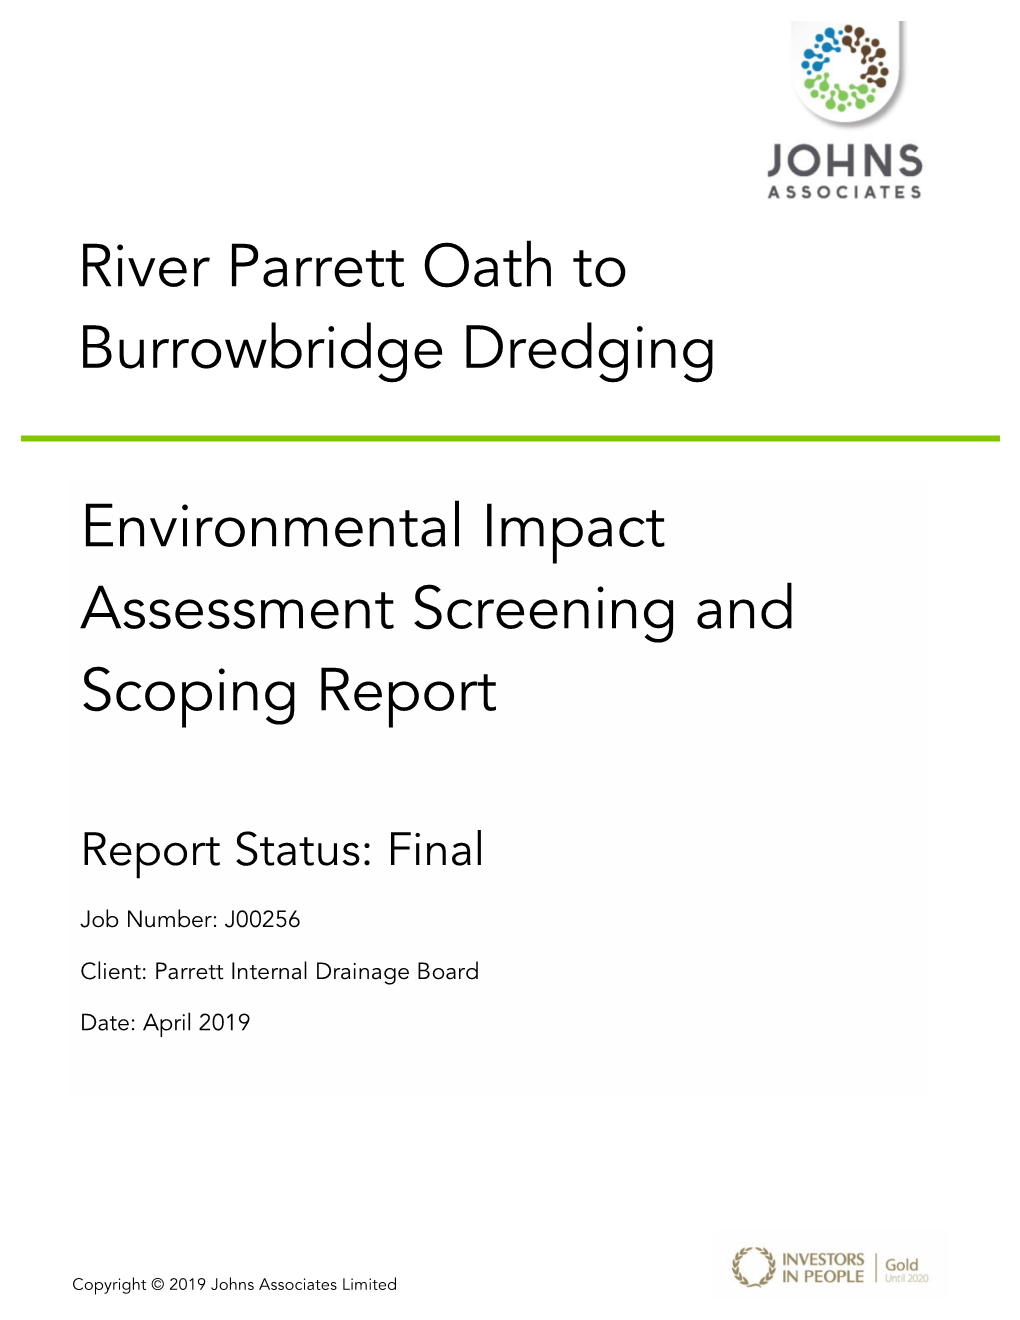 River Parrett Oath to Burrowbridge Dredging Environmental Impact